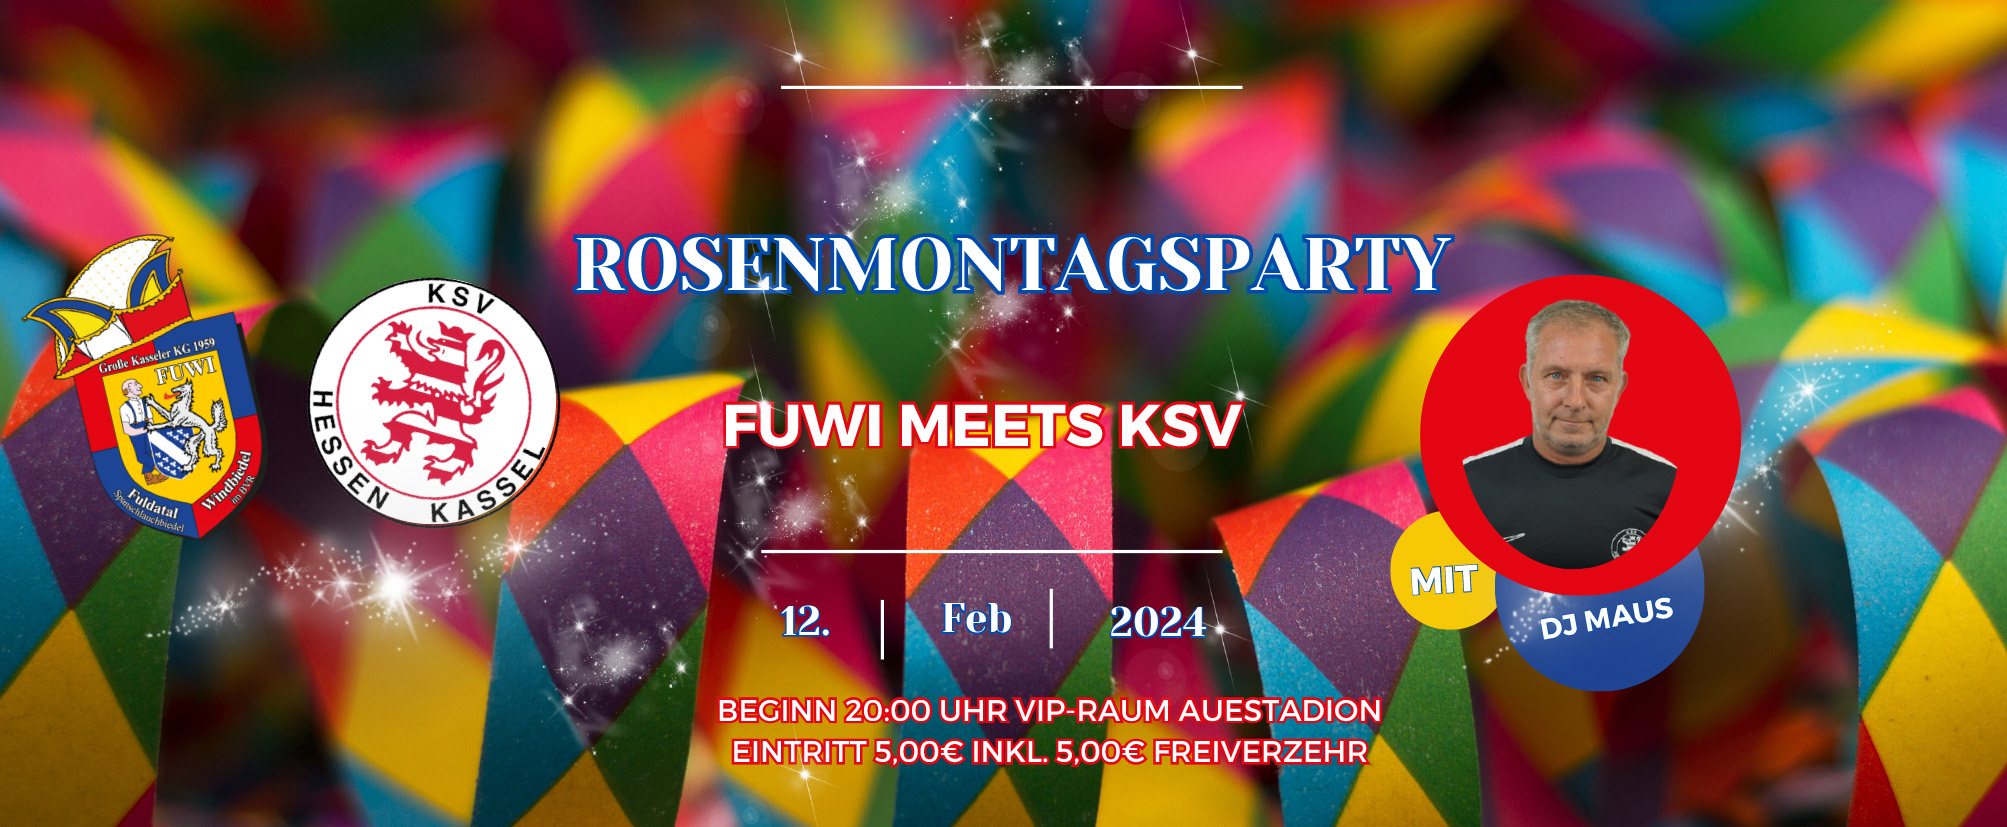 Rosenmontag 2024: Fuwi meets KSV 2.0